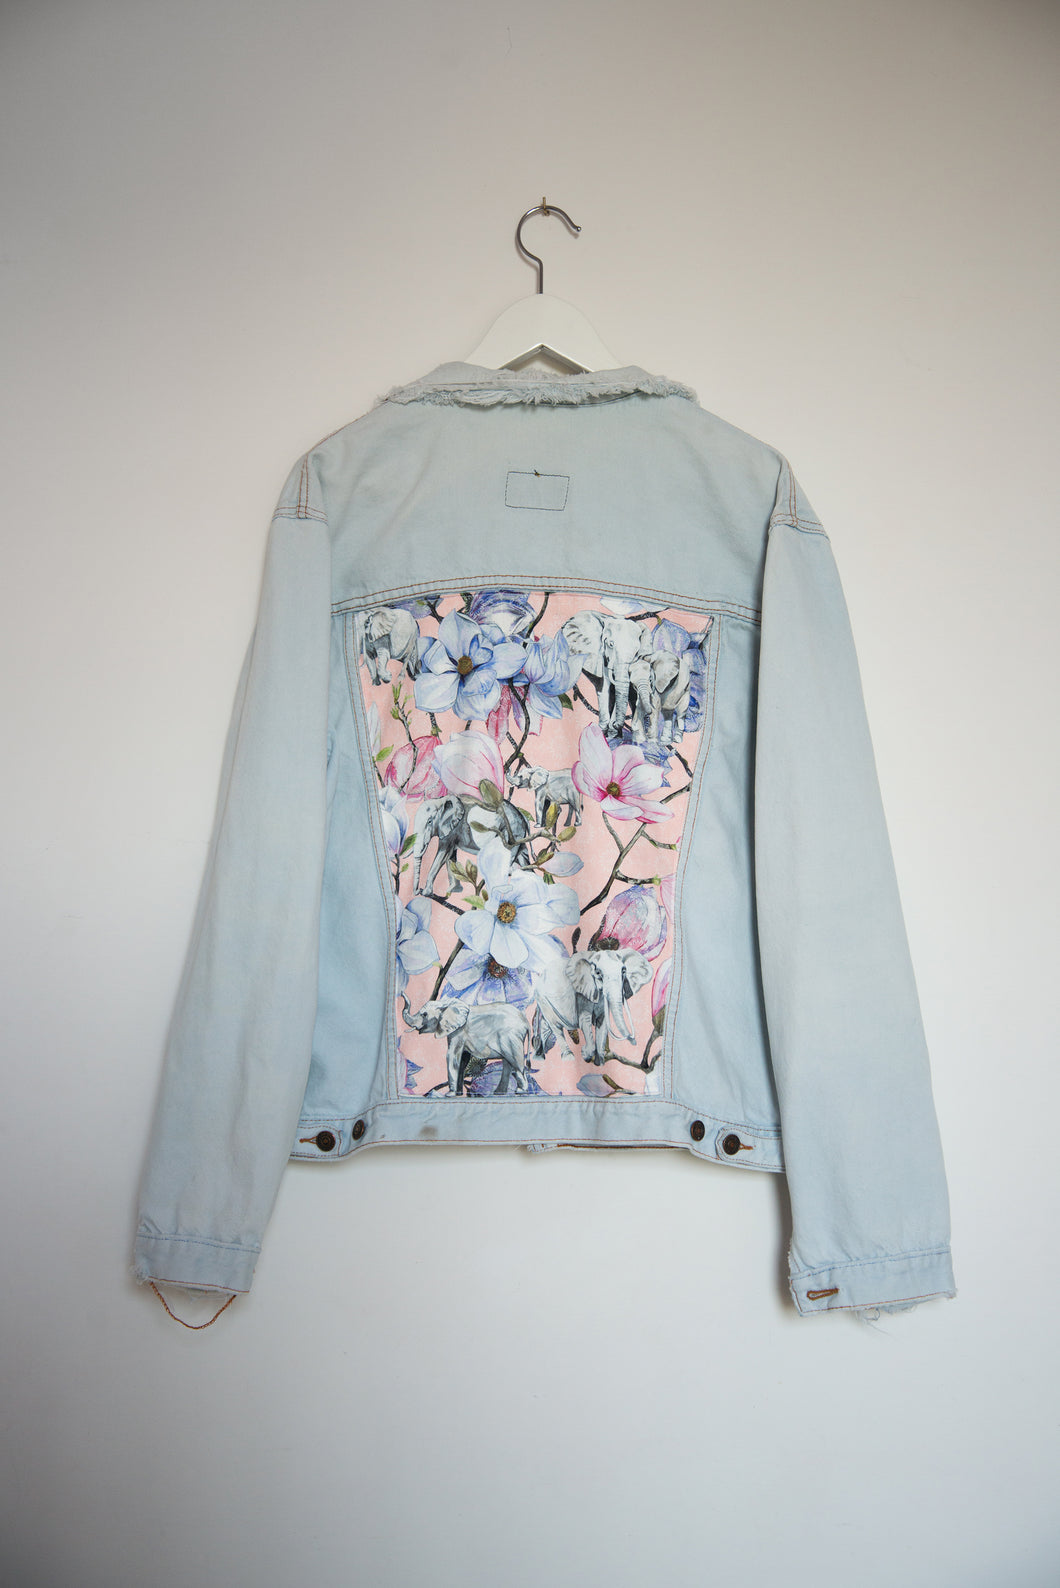 Levi's Denim jacket, Pink Magnolia Elephants design